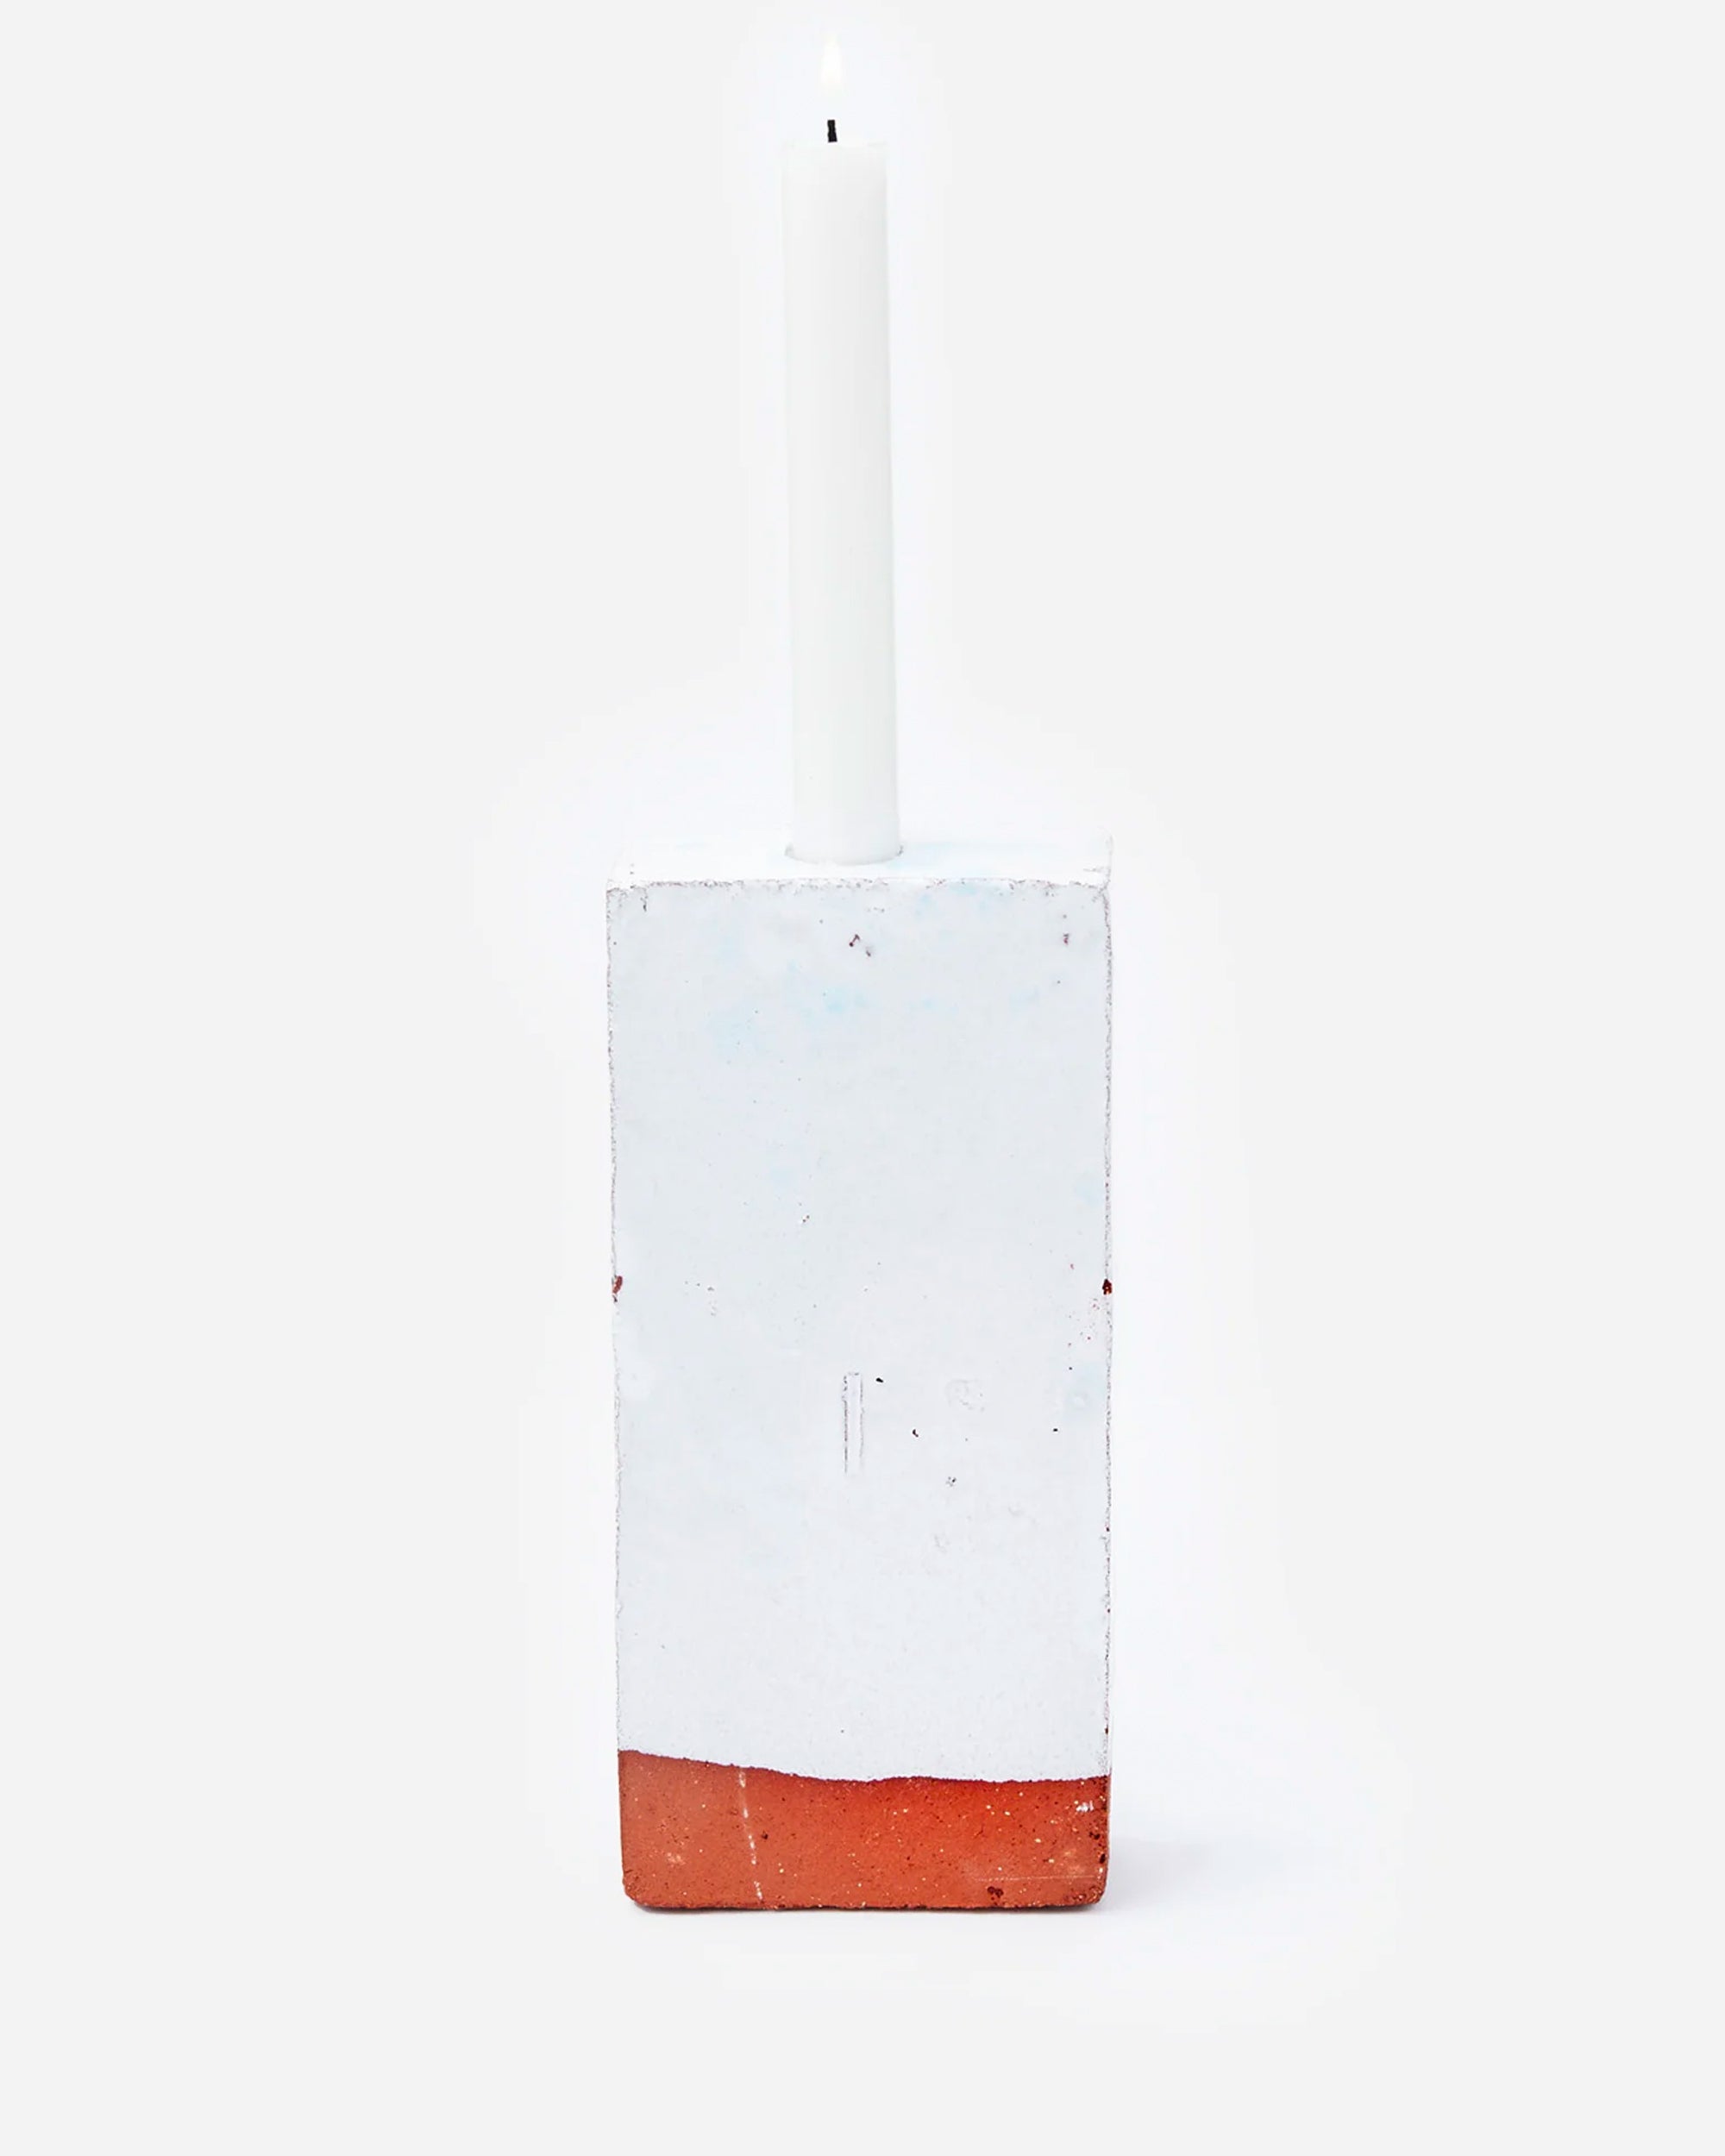 NIKO JUNE A Single Brick Candle White  21-ASIBRCA-WH